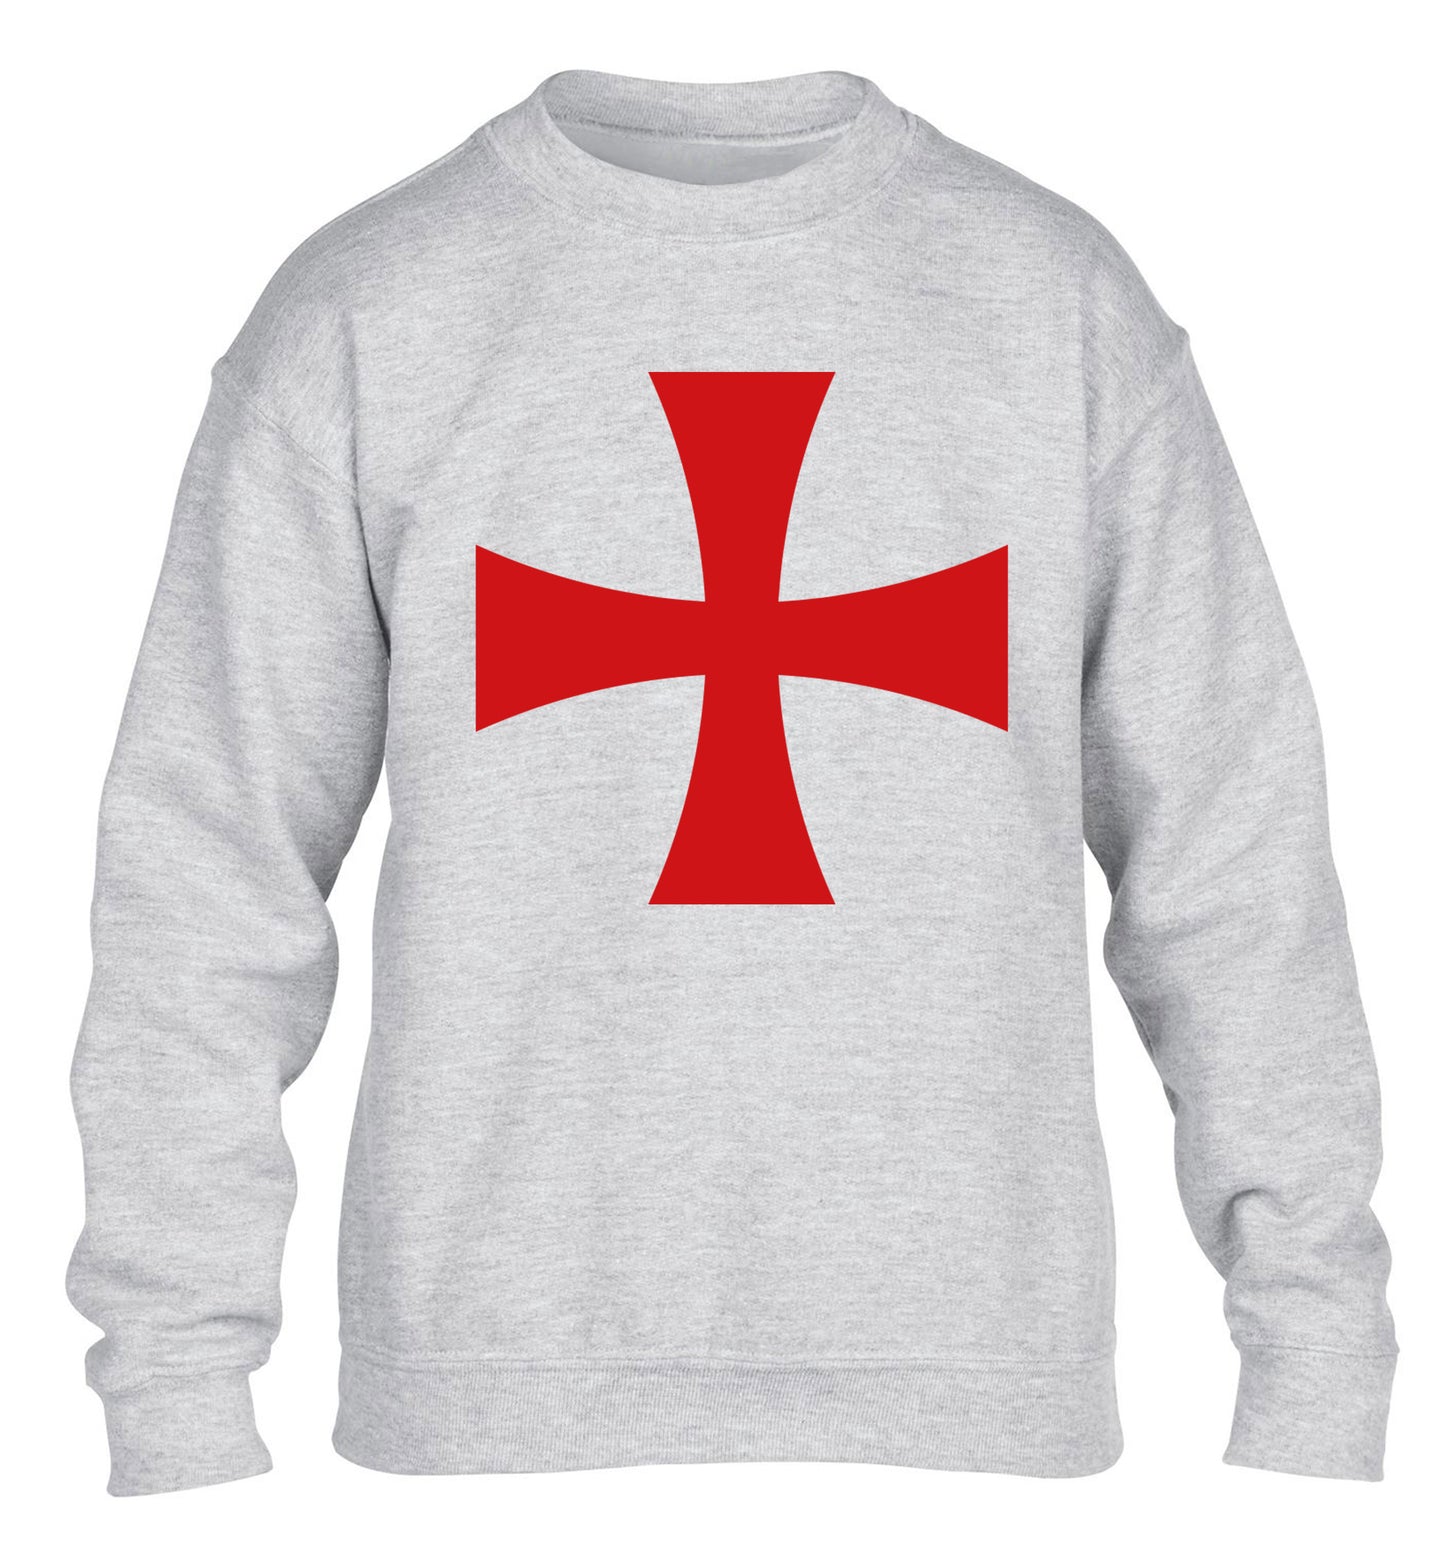 Knights Templar cross children's grey sweater 12-14 Years